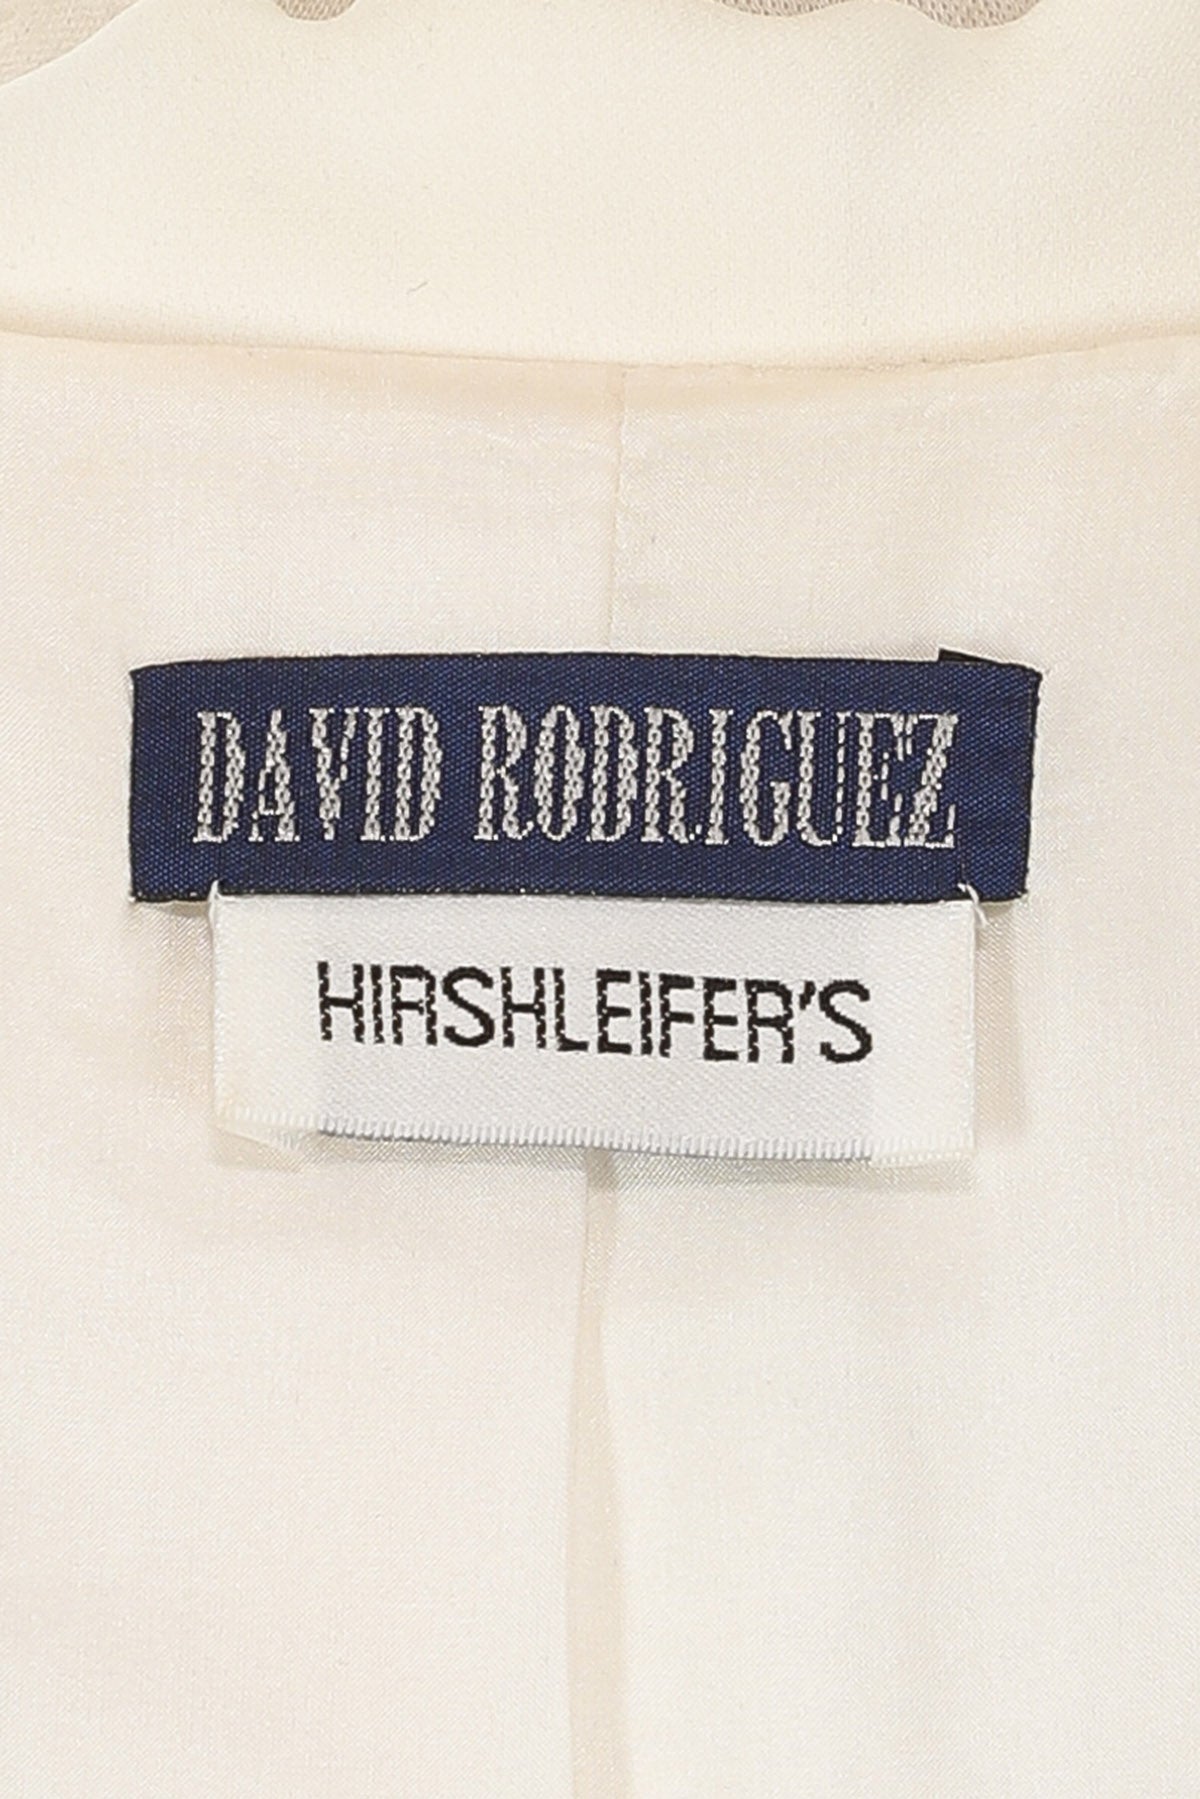 Vintage David Rodriguez White Pantsuit